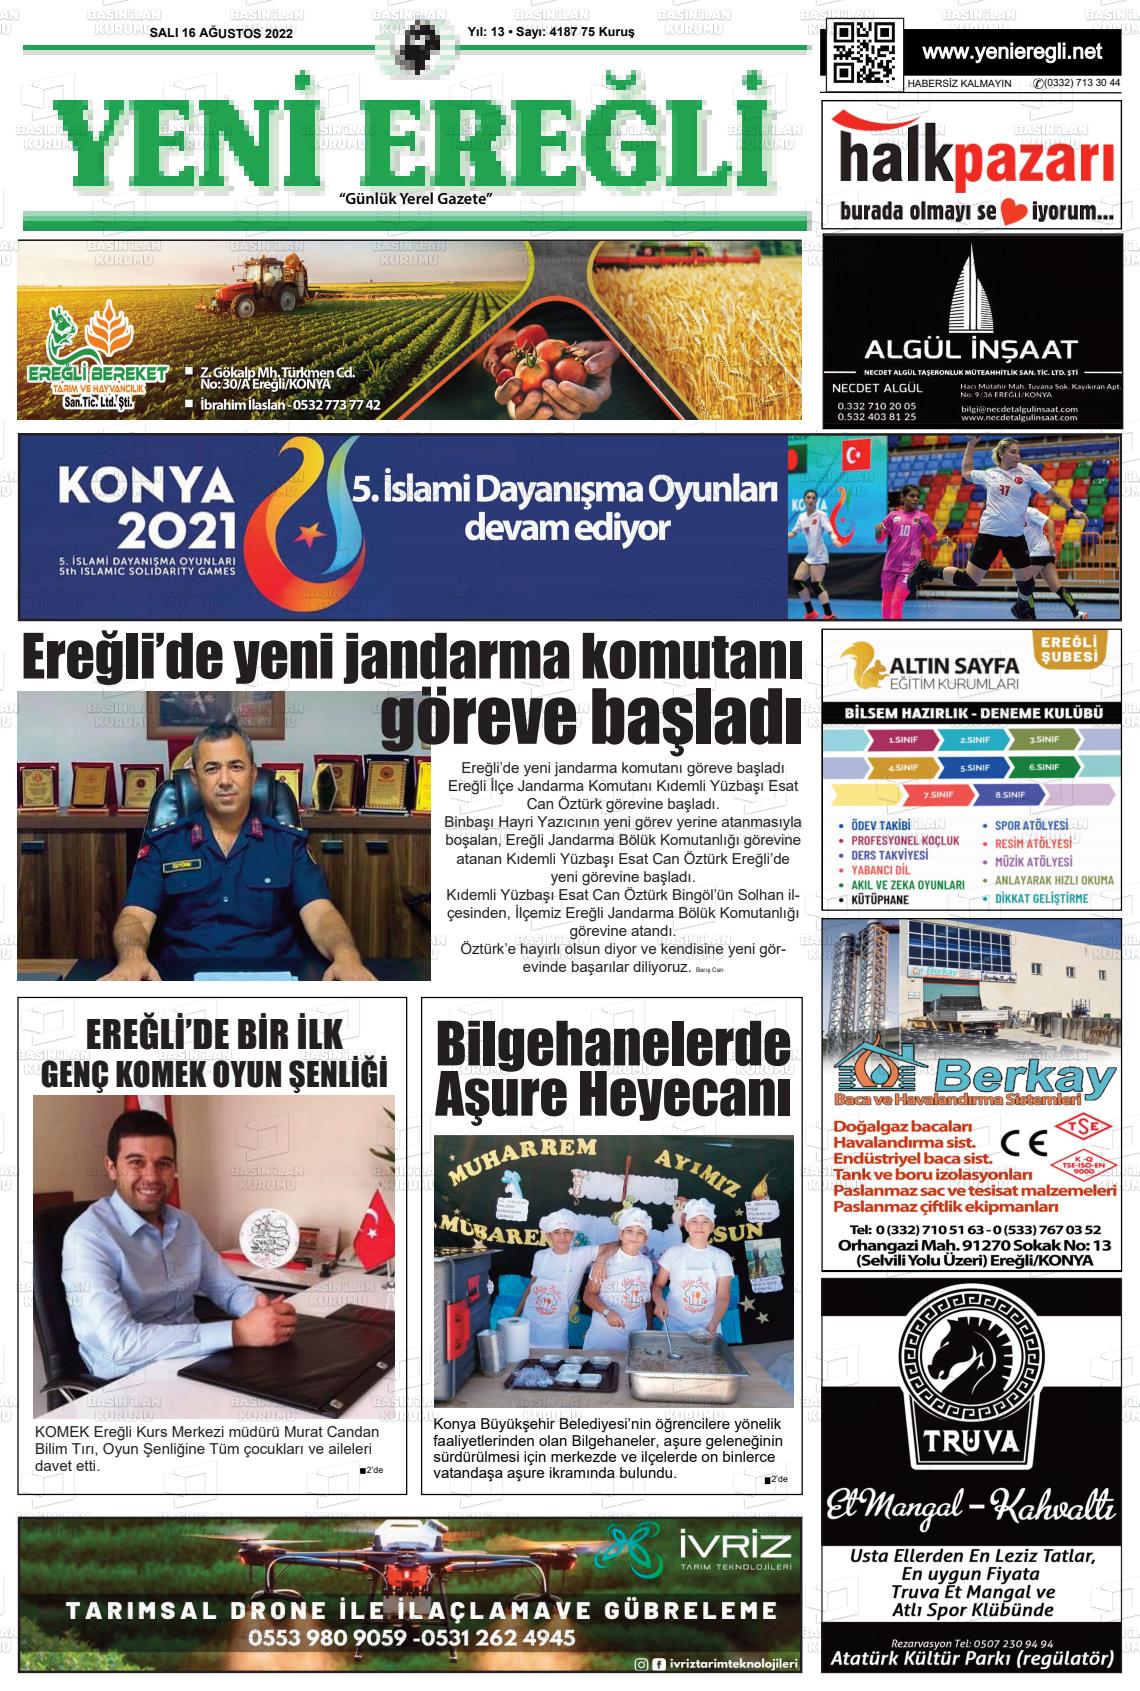 16 Ağustos 2022 Yeni Ereğli Gazete Manşeti